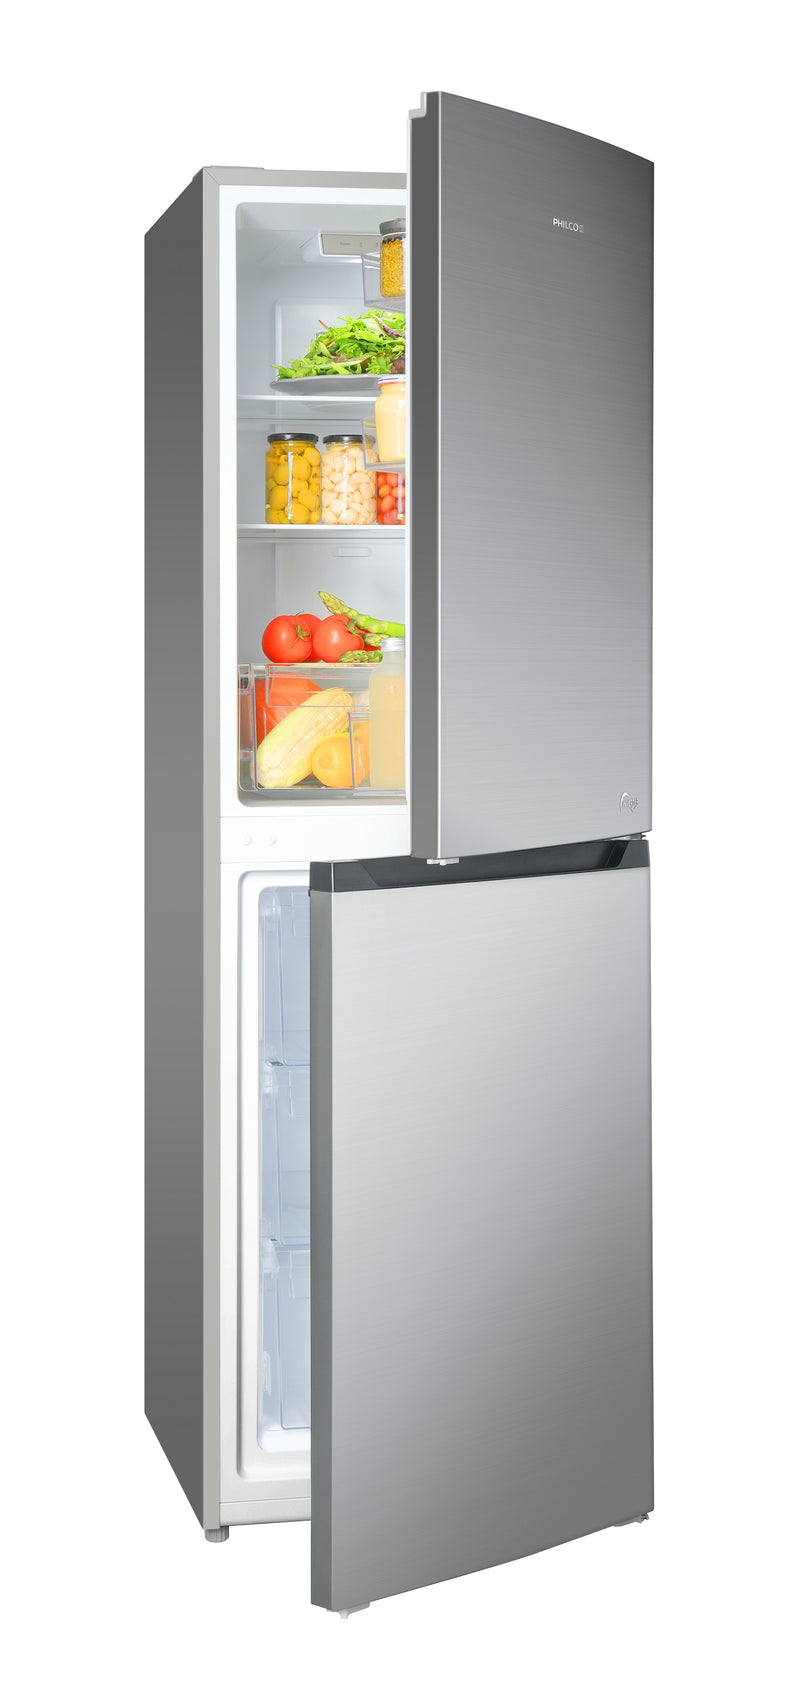 PHILCO PFBM30SV 228L Inverter Compressor Refrigerator (includes unpacking and moving appliance service)